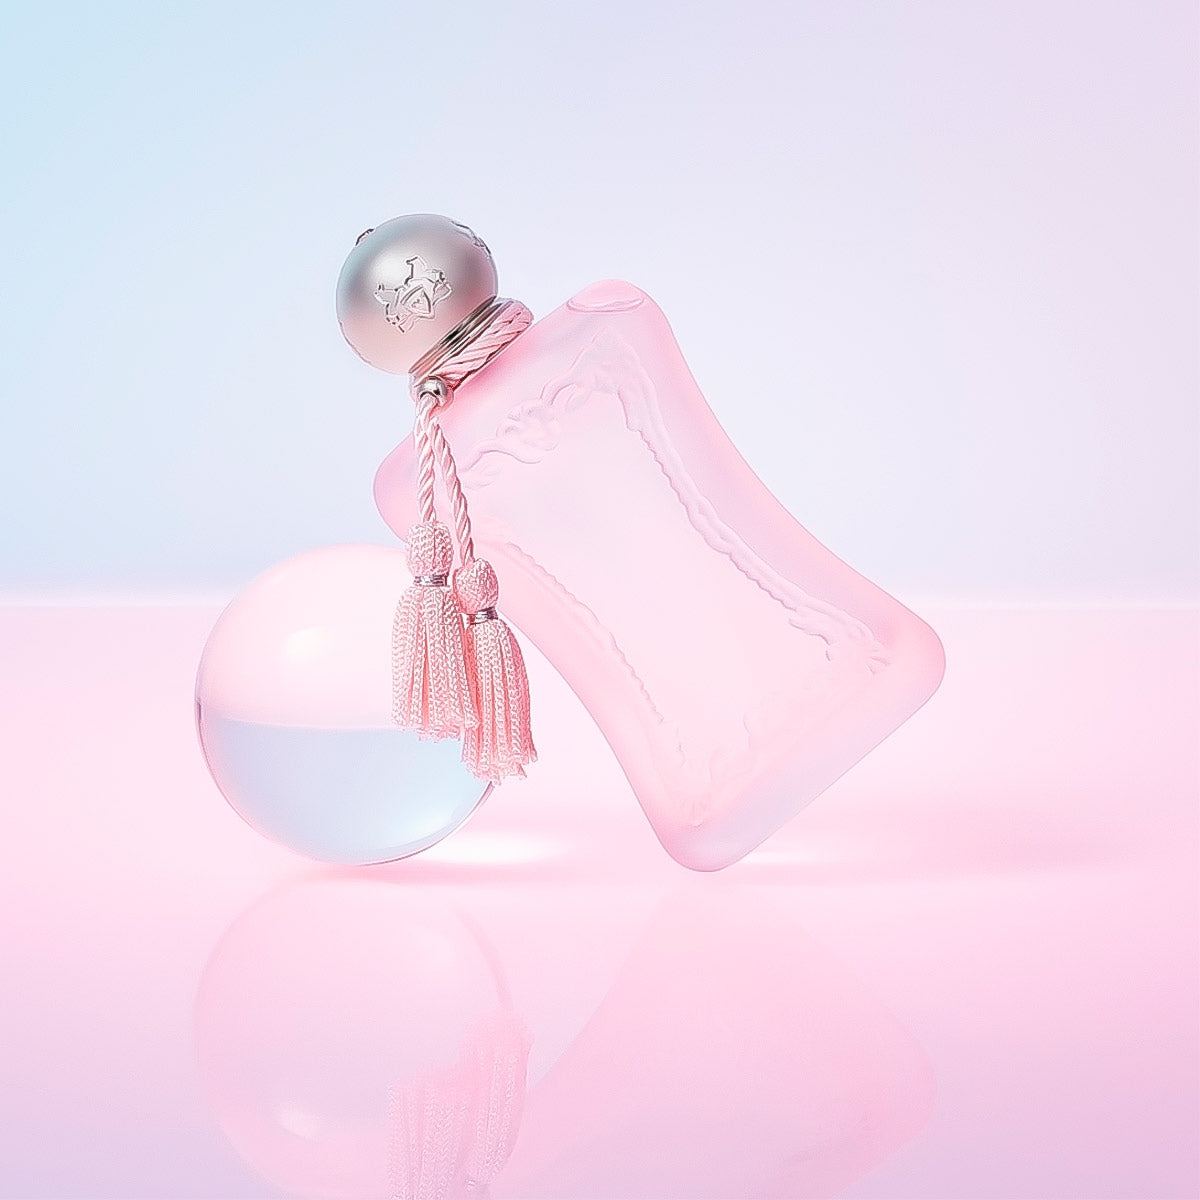 Delina La Rosée - Parfums De Marly - EDP 75ml